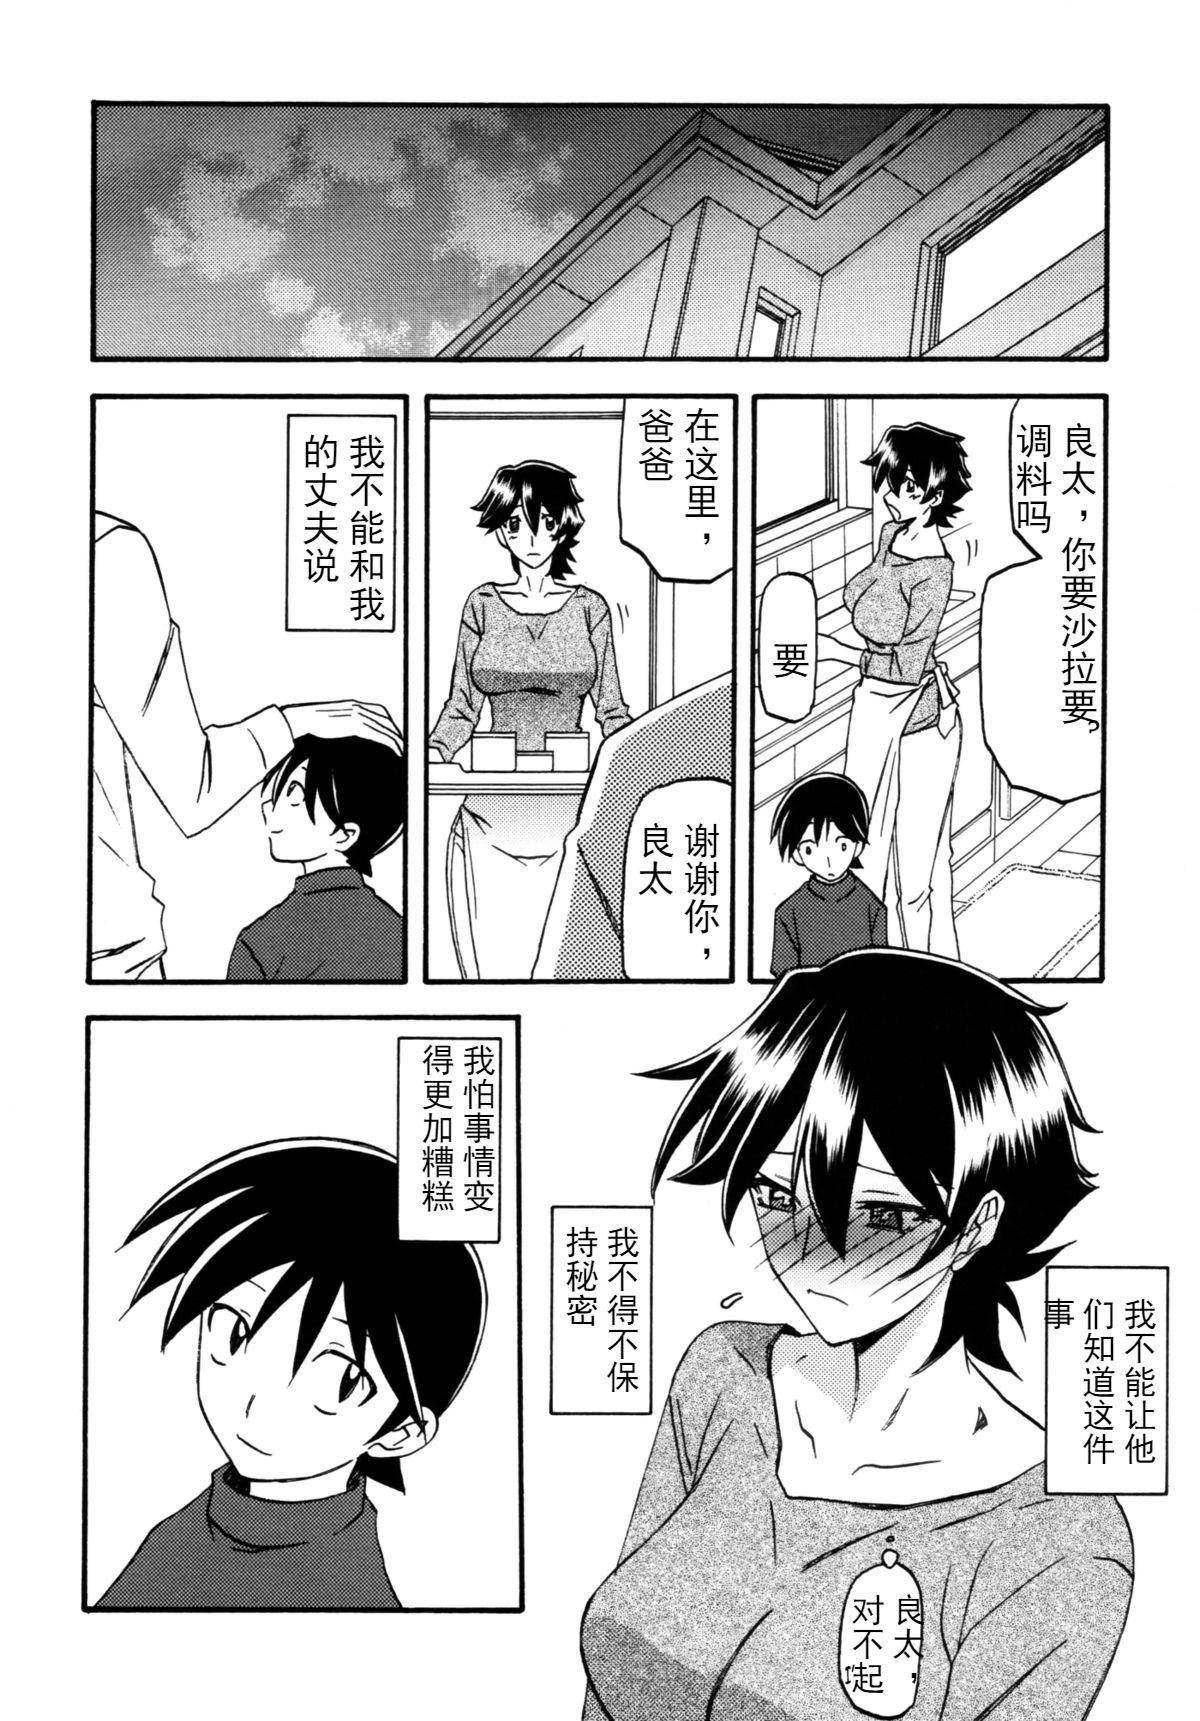 Gays Akebi no Mi - Yuuko Katei - Akebi no mi Whipping - Page 9